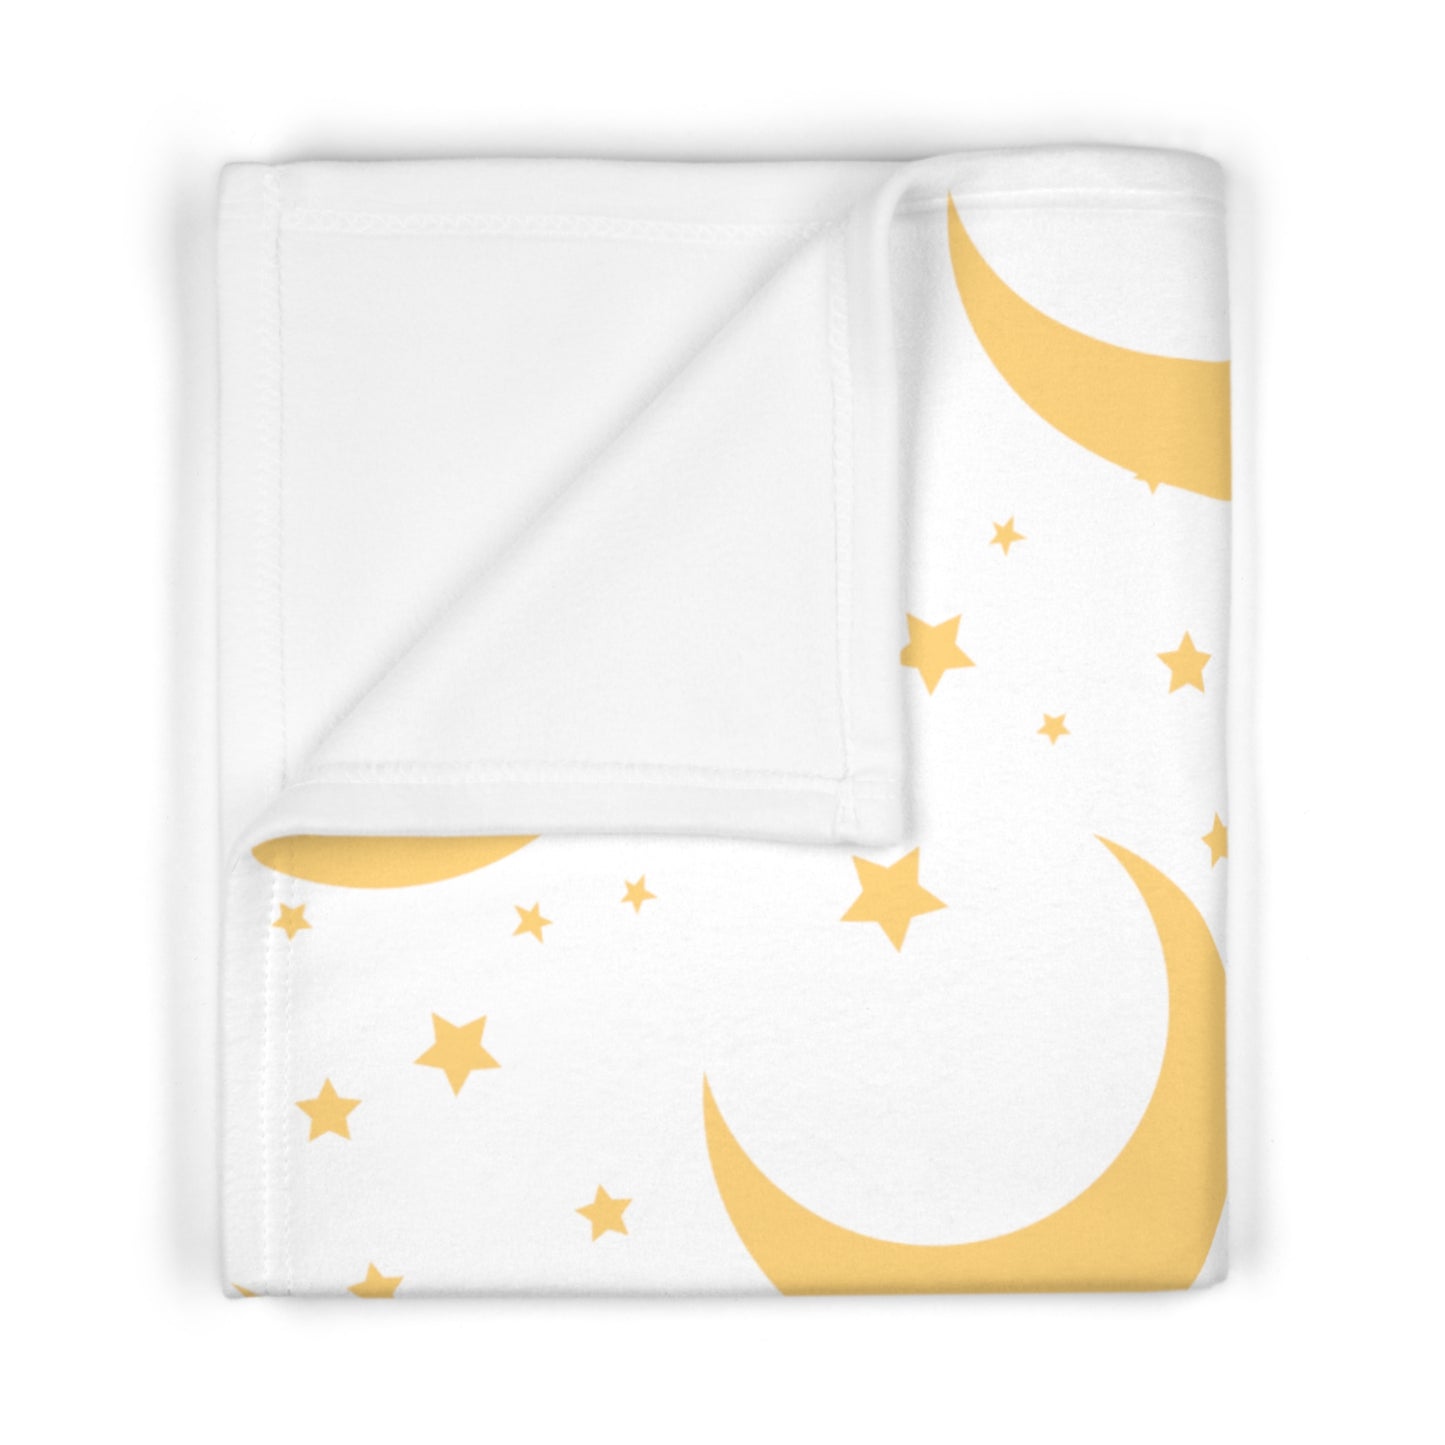 Dreamy Yellow Moon and Stars Soft Fleece Baby Blanket